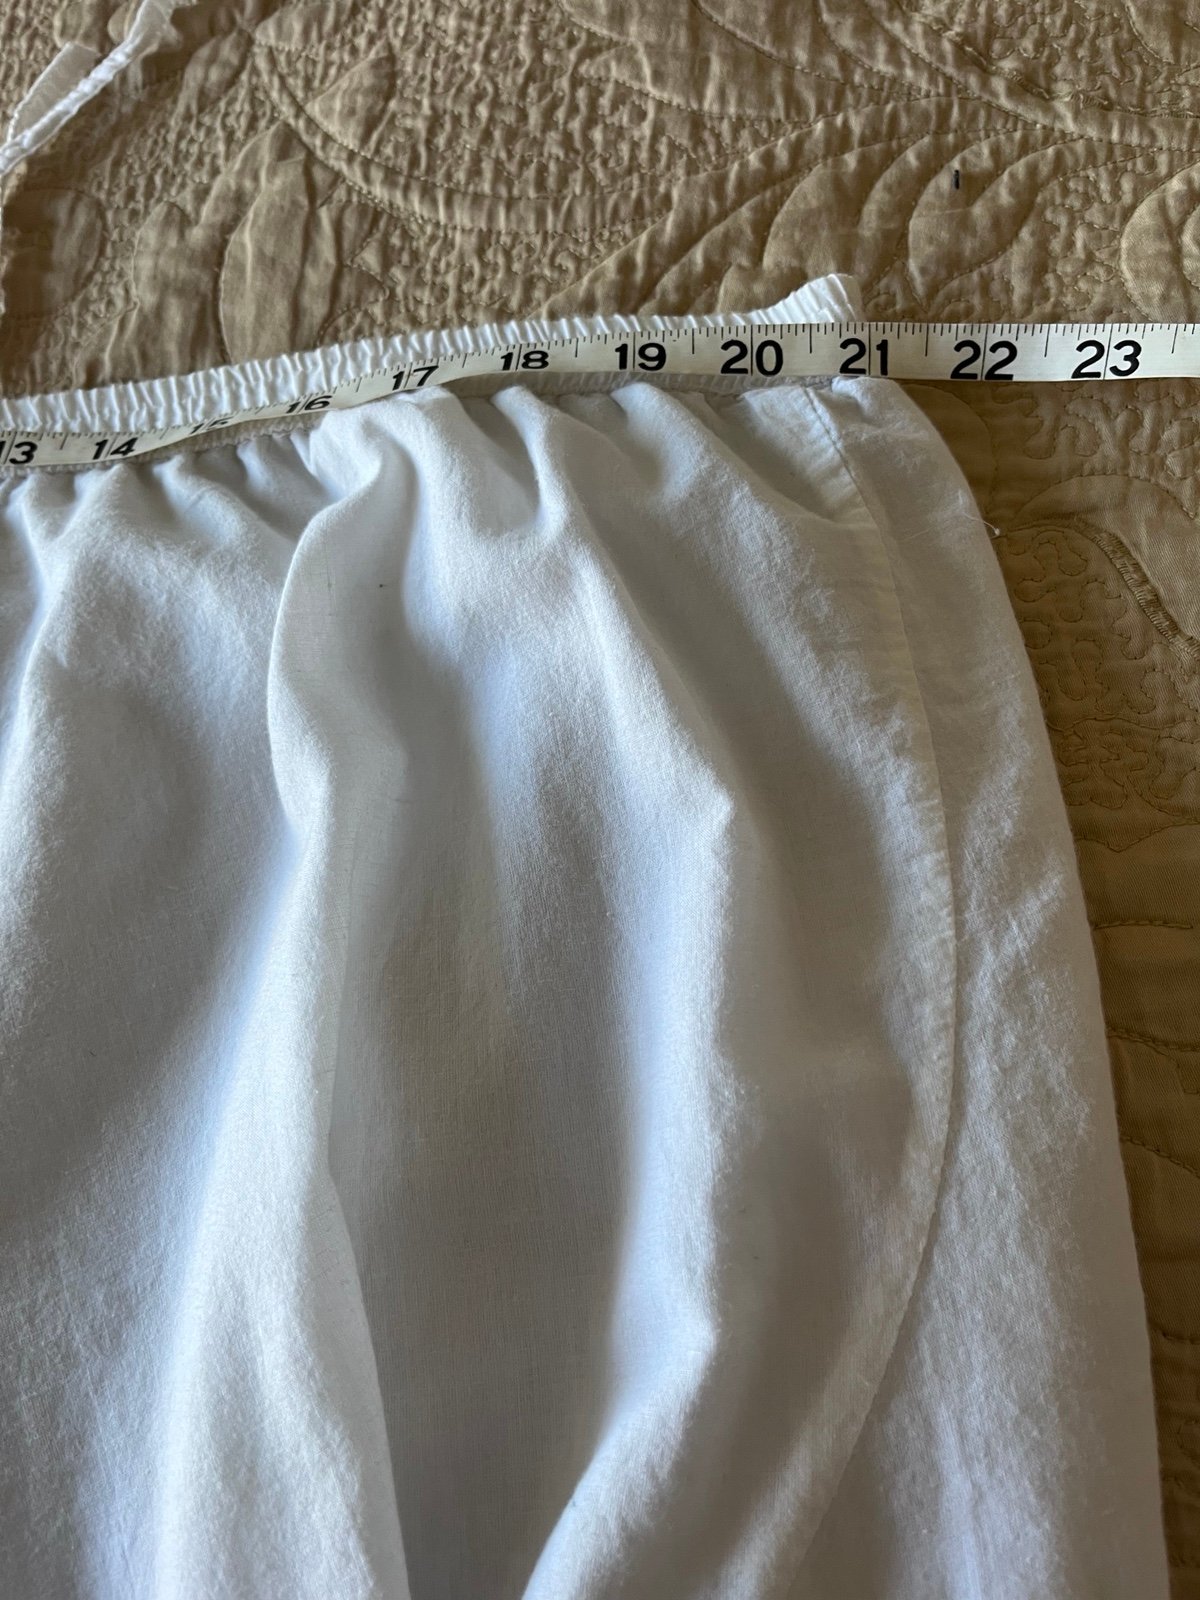 Cheap Metrowear 3X white Cotton Skirt Preowned KIQ9xY68G outlet online shop